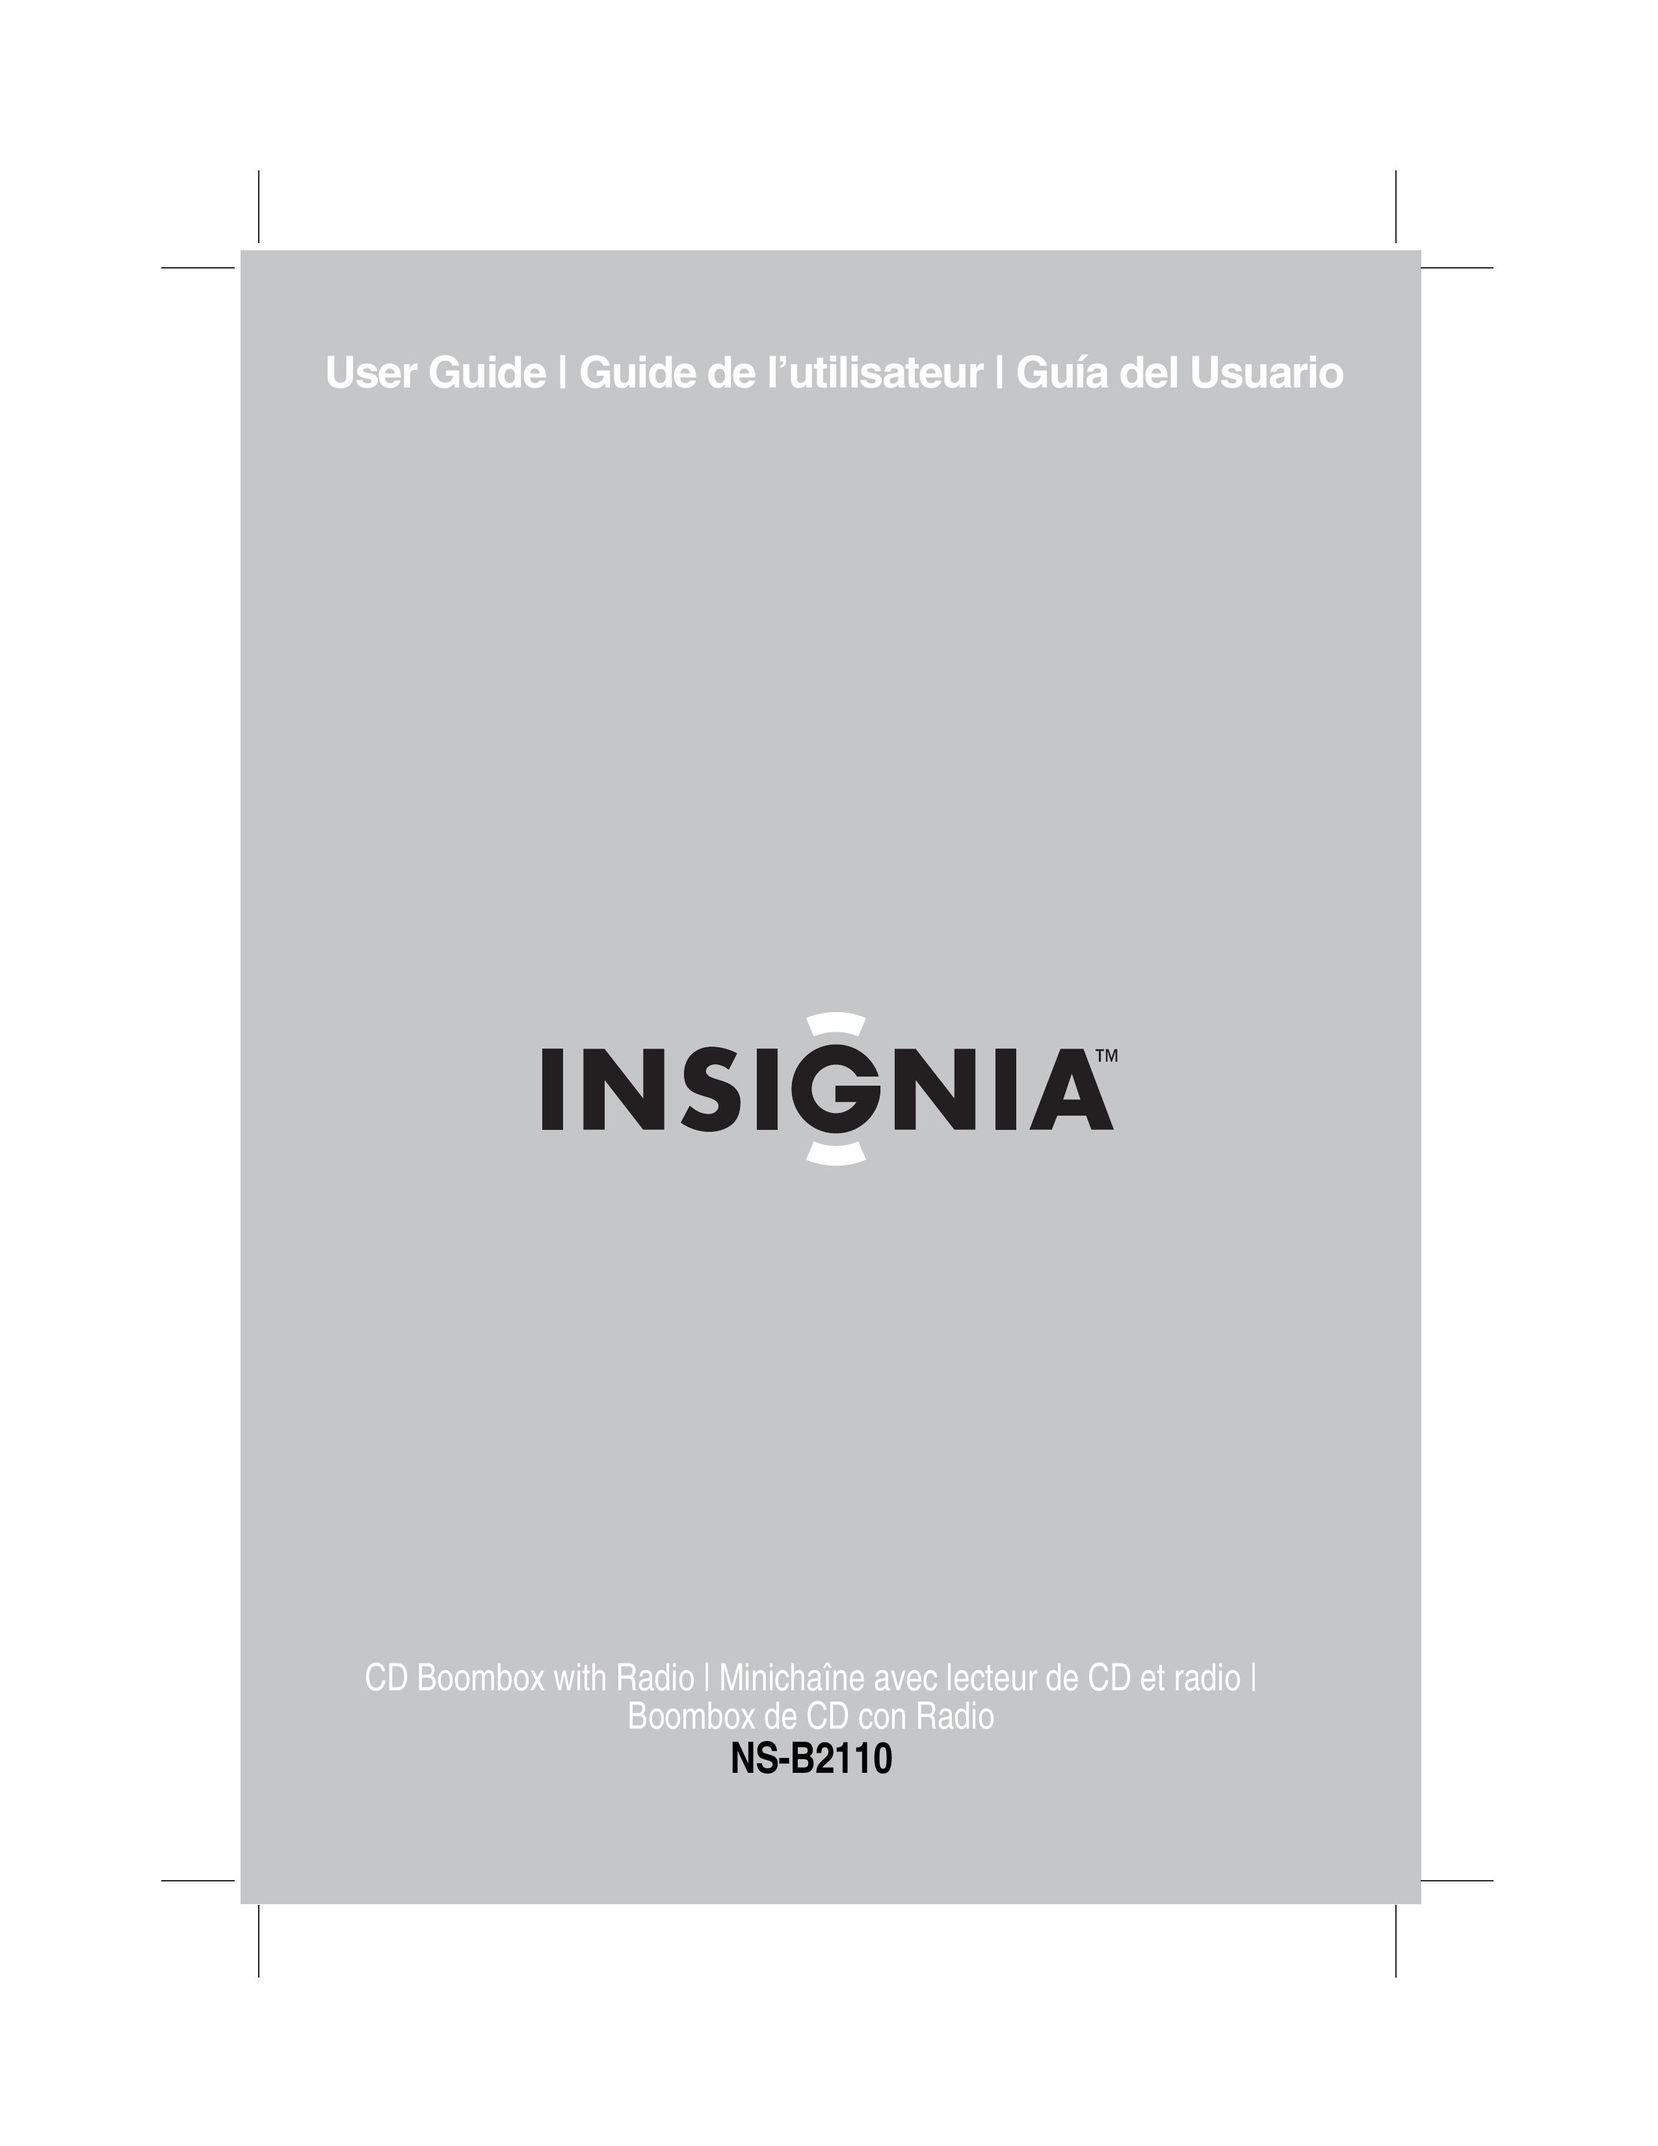 Insignia NS-B2110 Oven User Manual